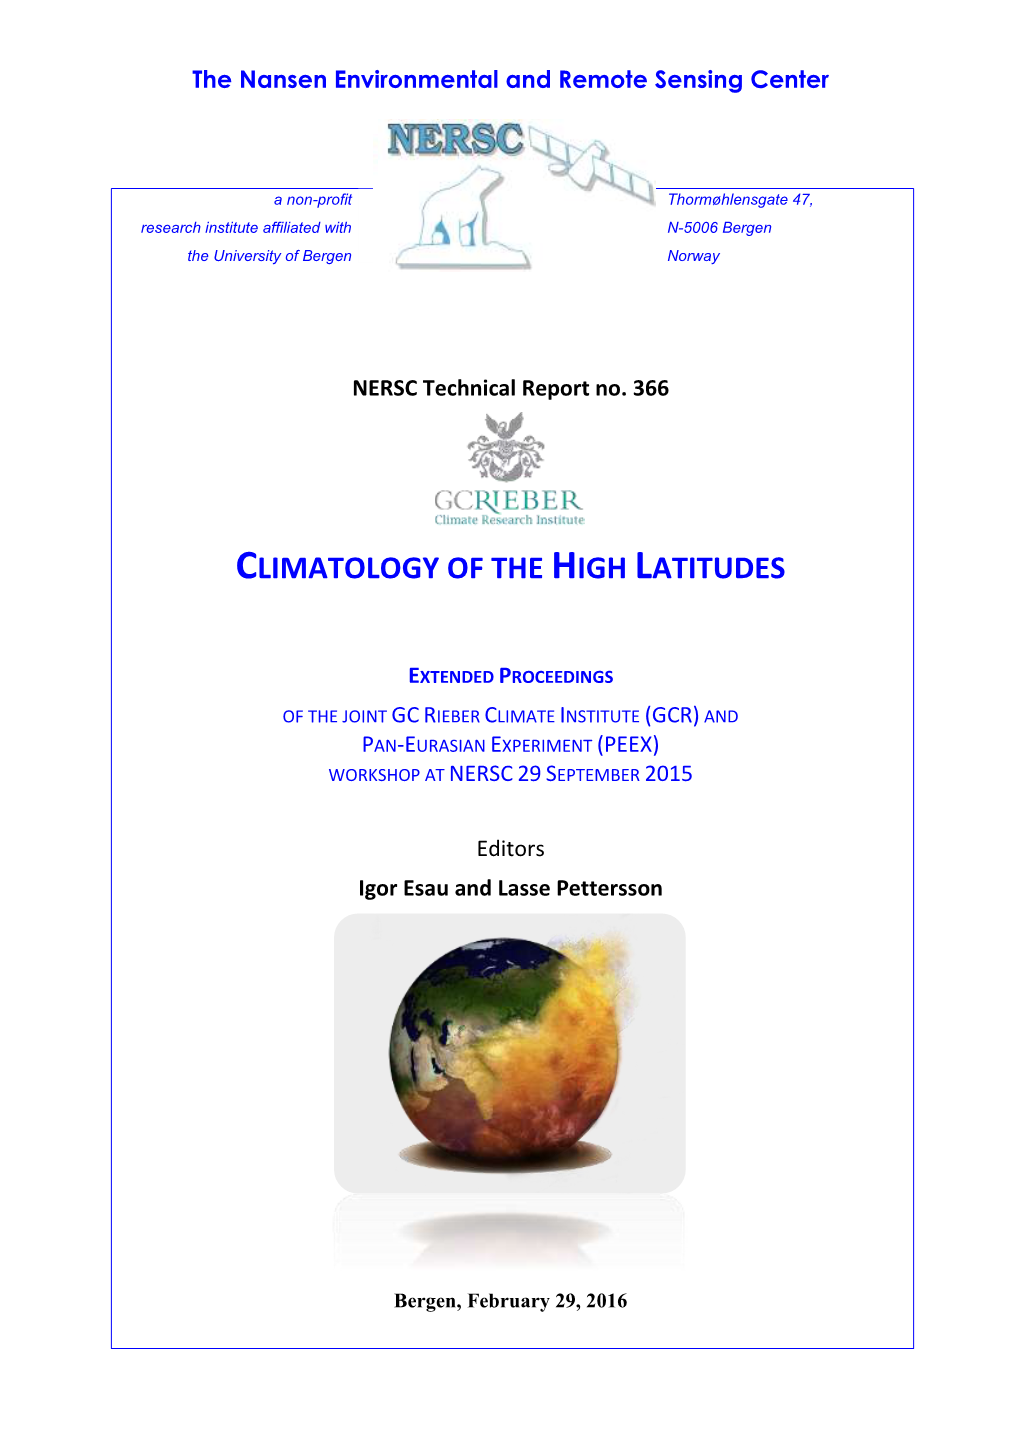 Climatology of the High Latitudes